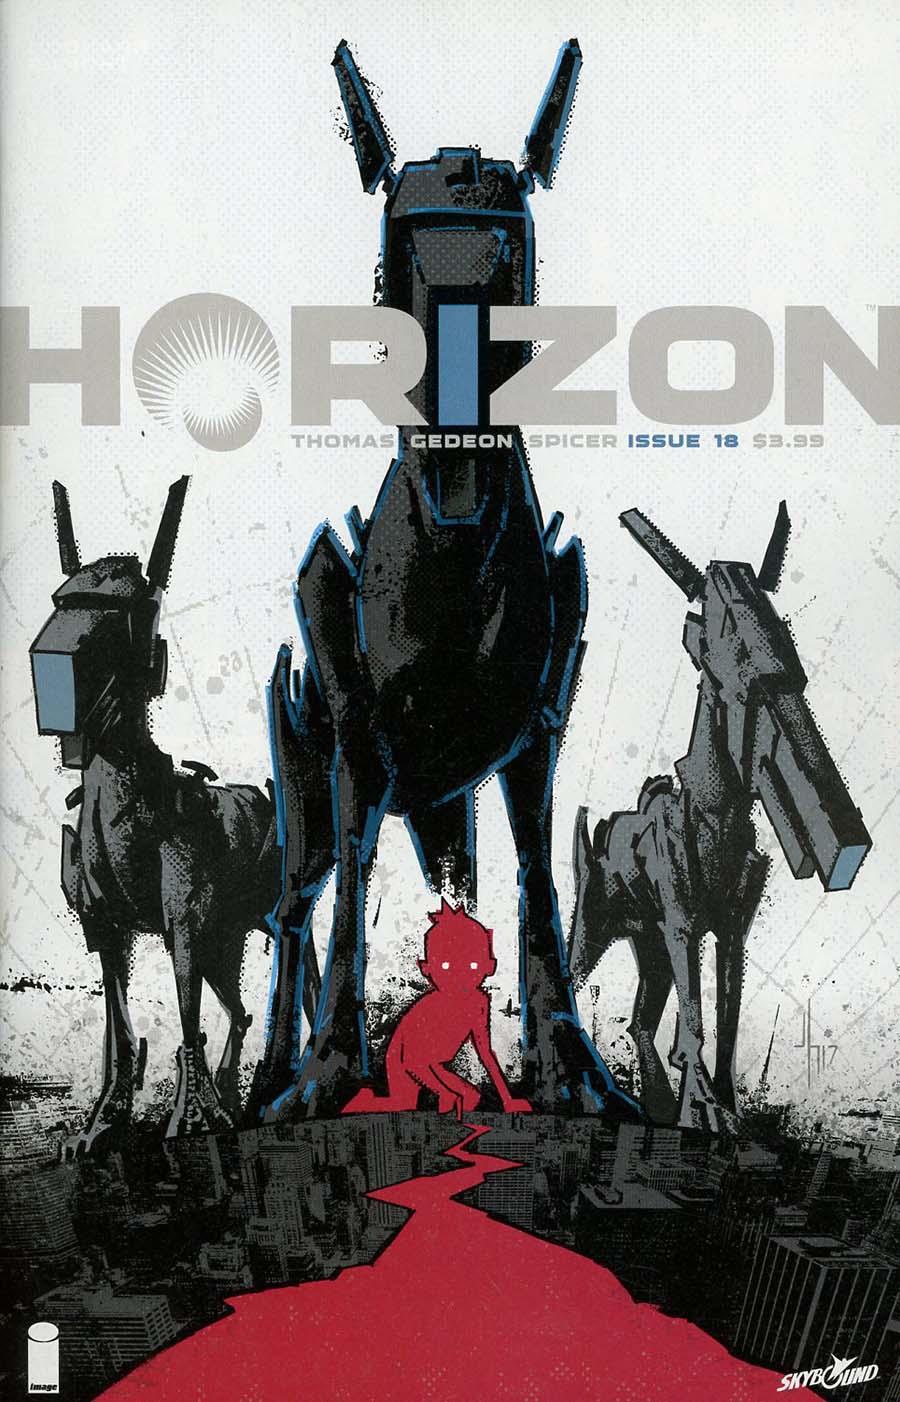 Horizon Vol. 1 #18